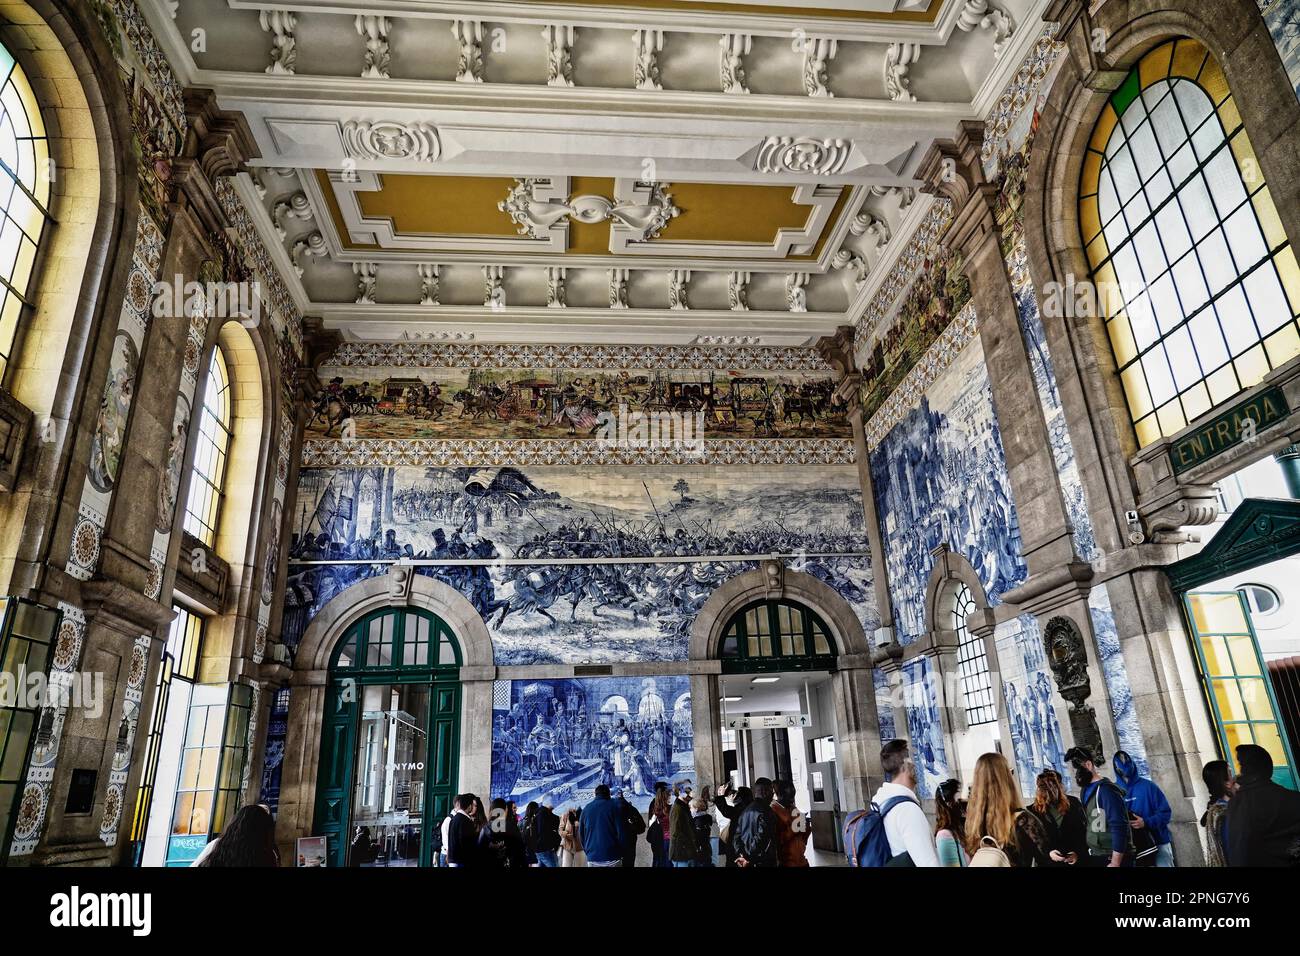 View of azulejos on walls of ornate interior of Arrivals Hall at Sao Bento Railway Station in Porto, Porto, Norte, Portugal Stock Photo